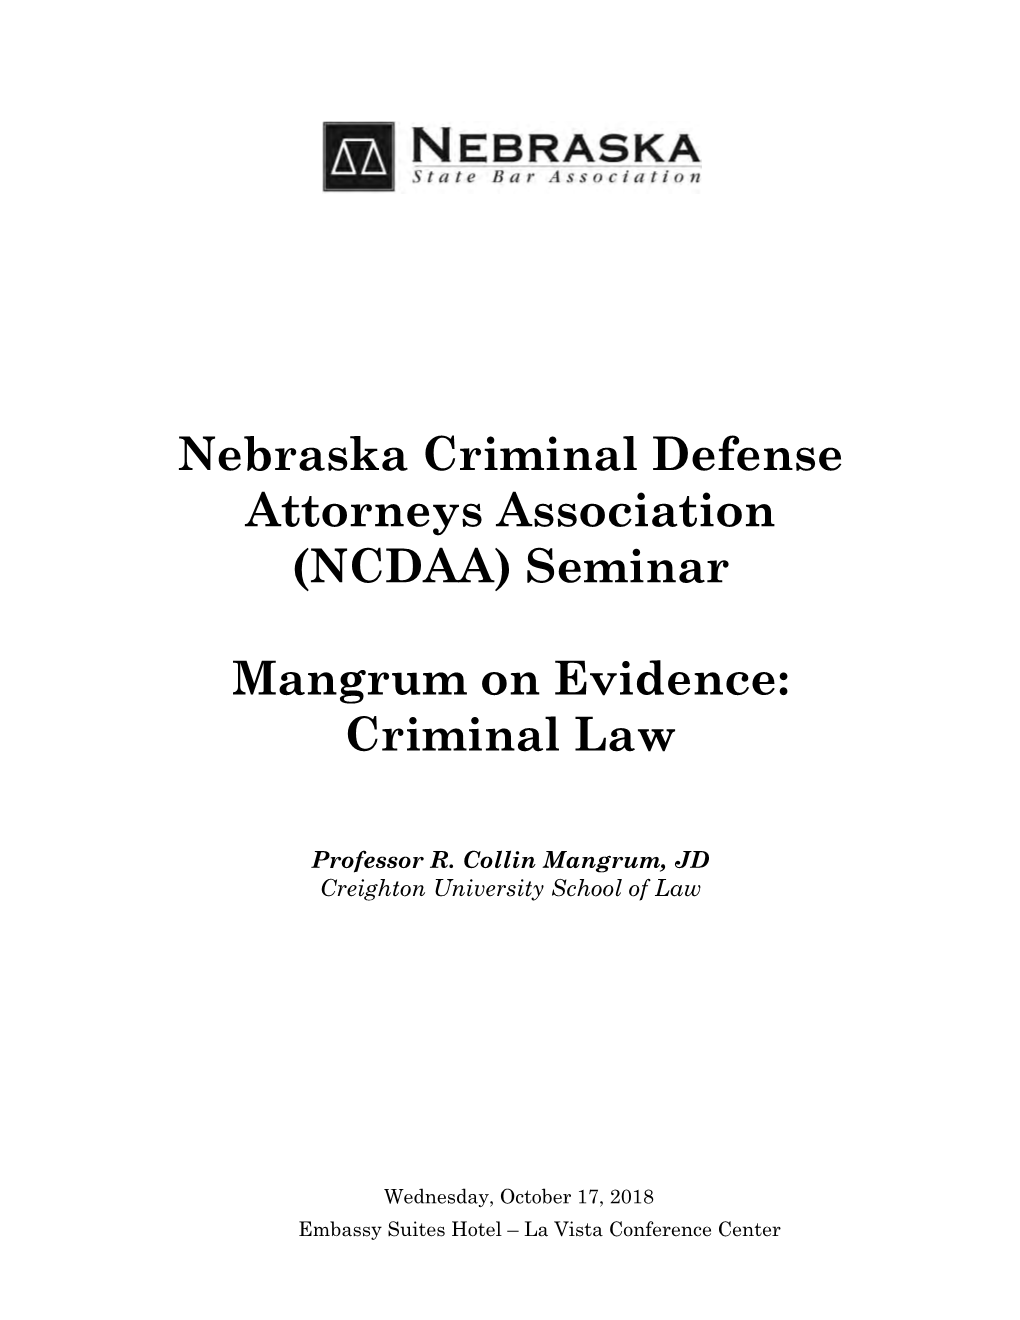 Nebraska Criminal Defense Attorneys Association (NCDAA) Seminar Mangrum on Evidence: Criminal